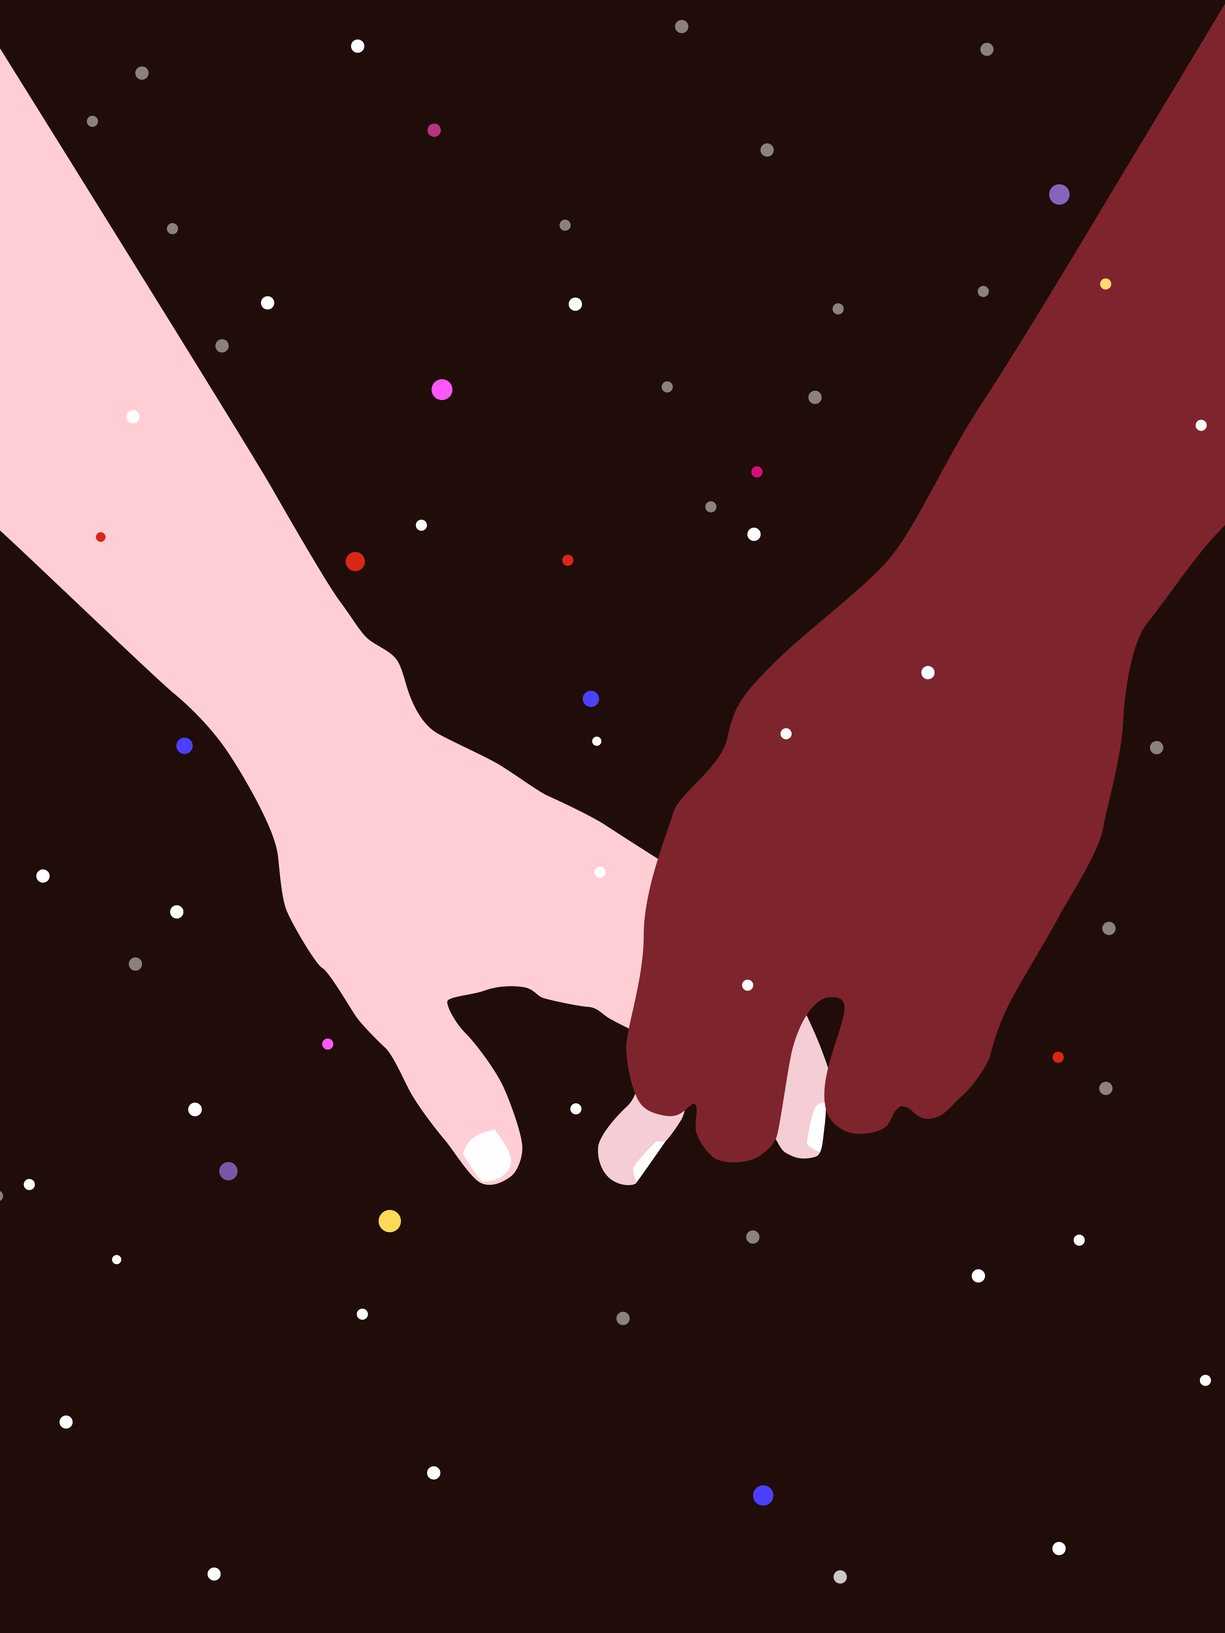 Couple holding hands illustration